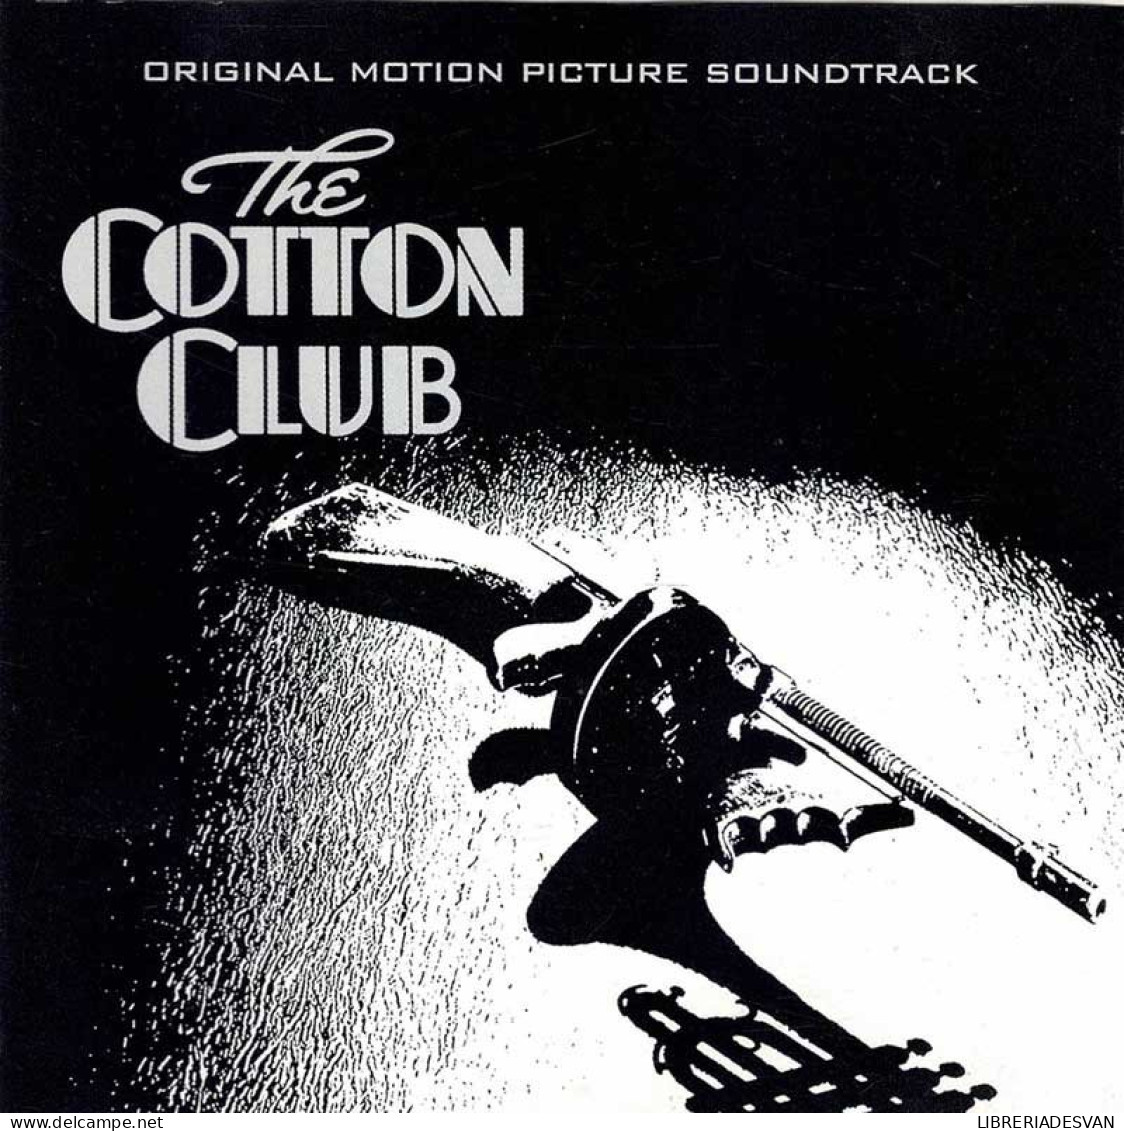 John Barry - The Cotton Club (Original Motion Picture Soundtrack). CD - Soundtracks, Film Music